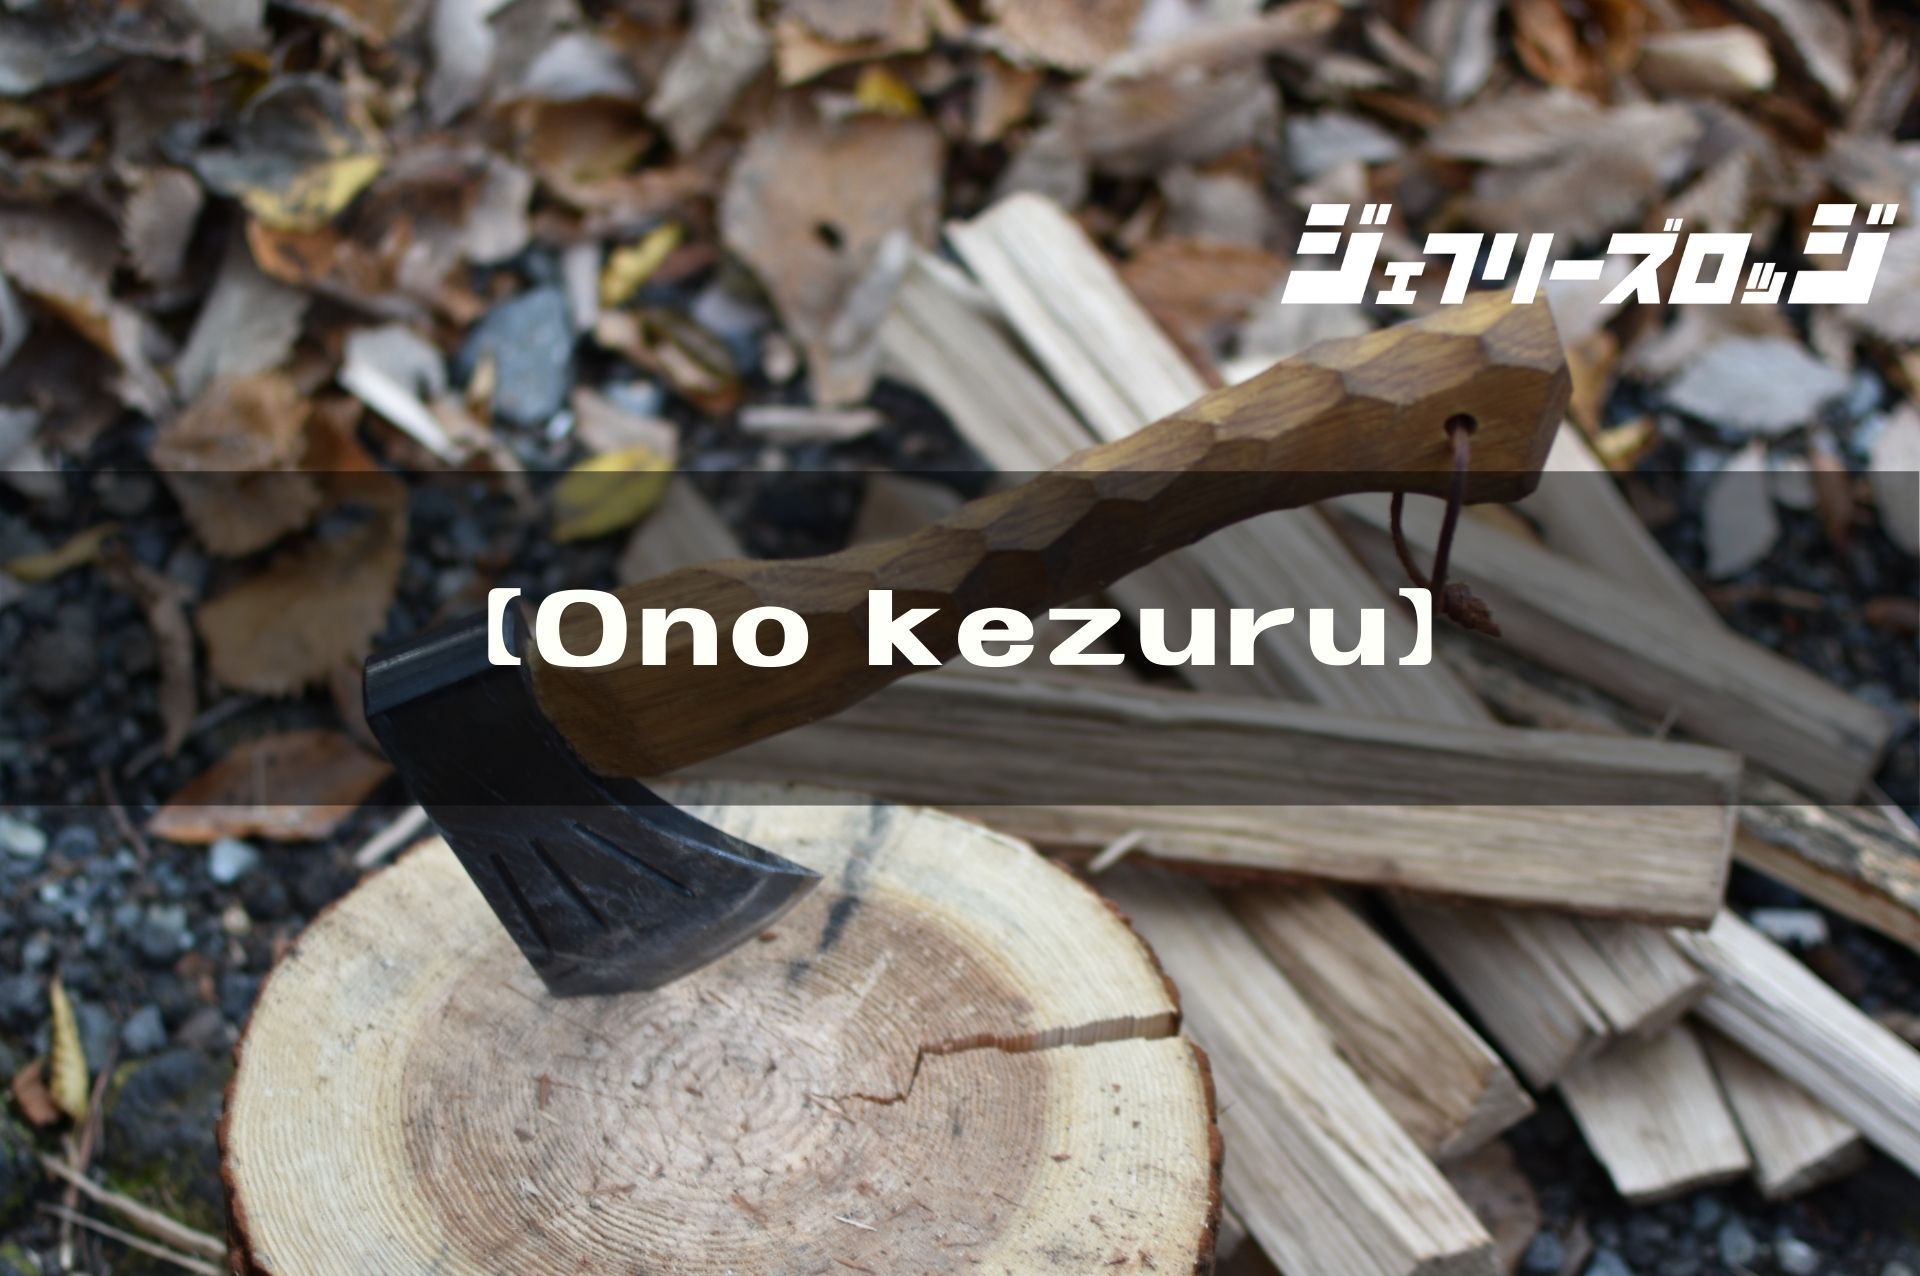 Ono kezuru】 唯一無二な存在感が漂う手斧 by neru design works x 